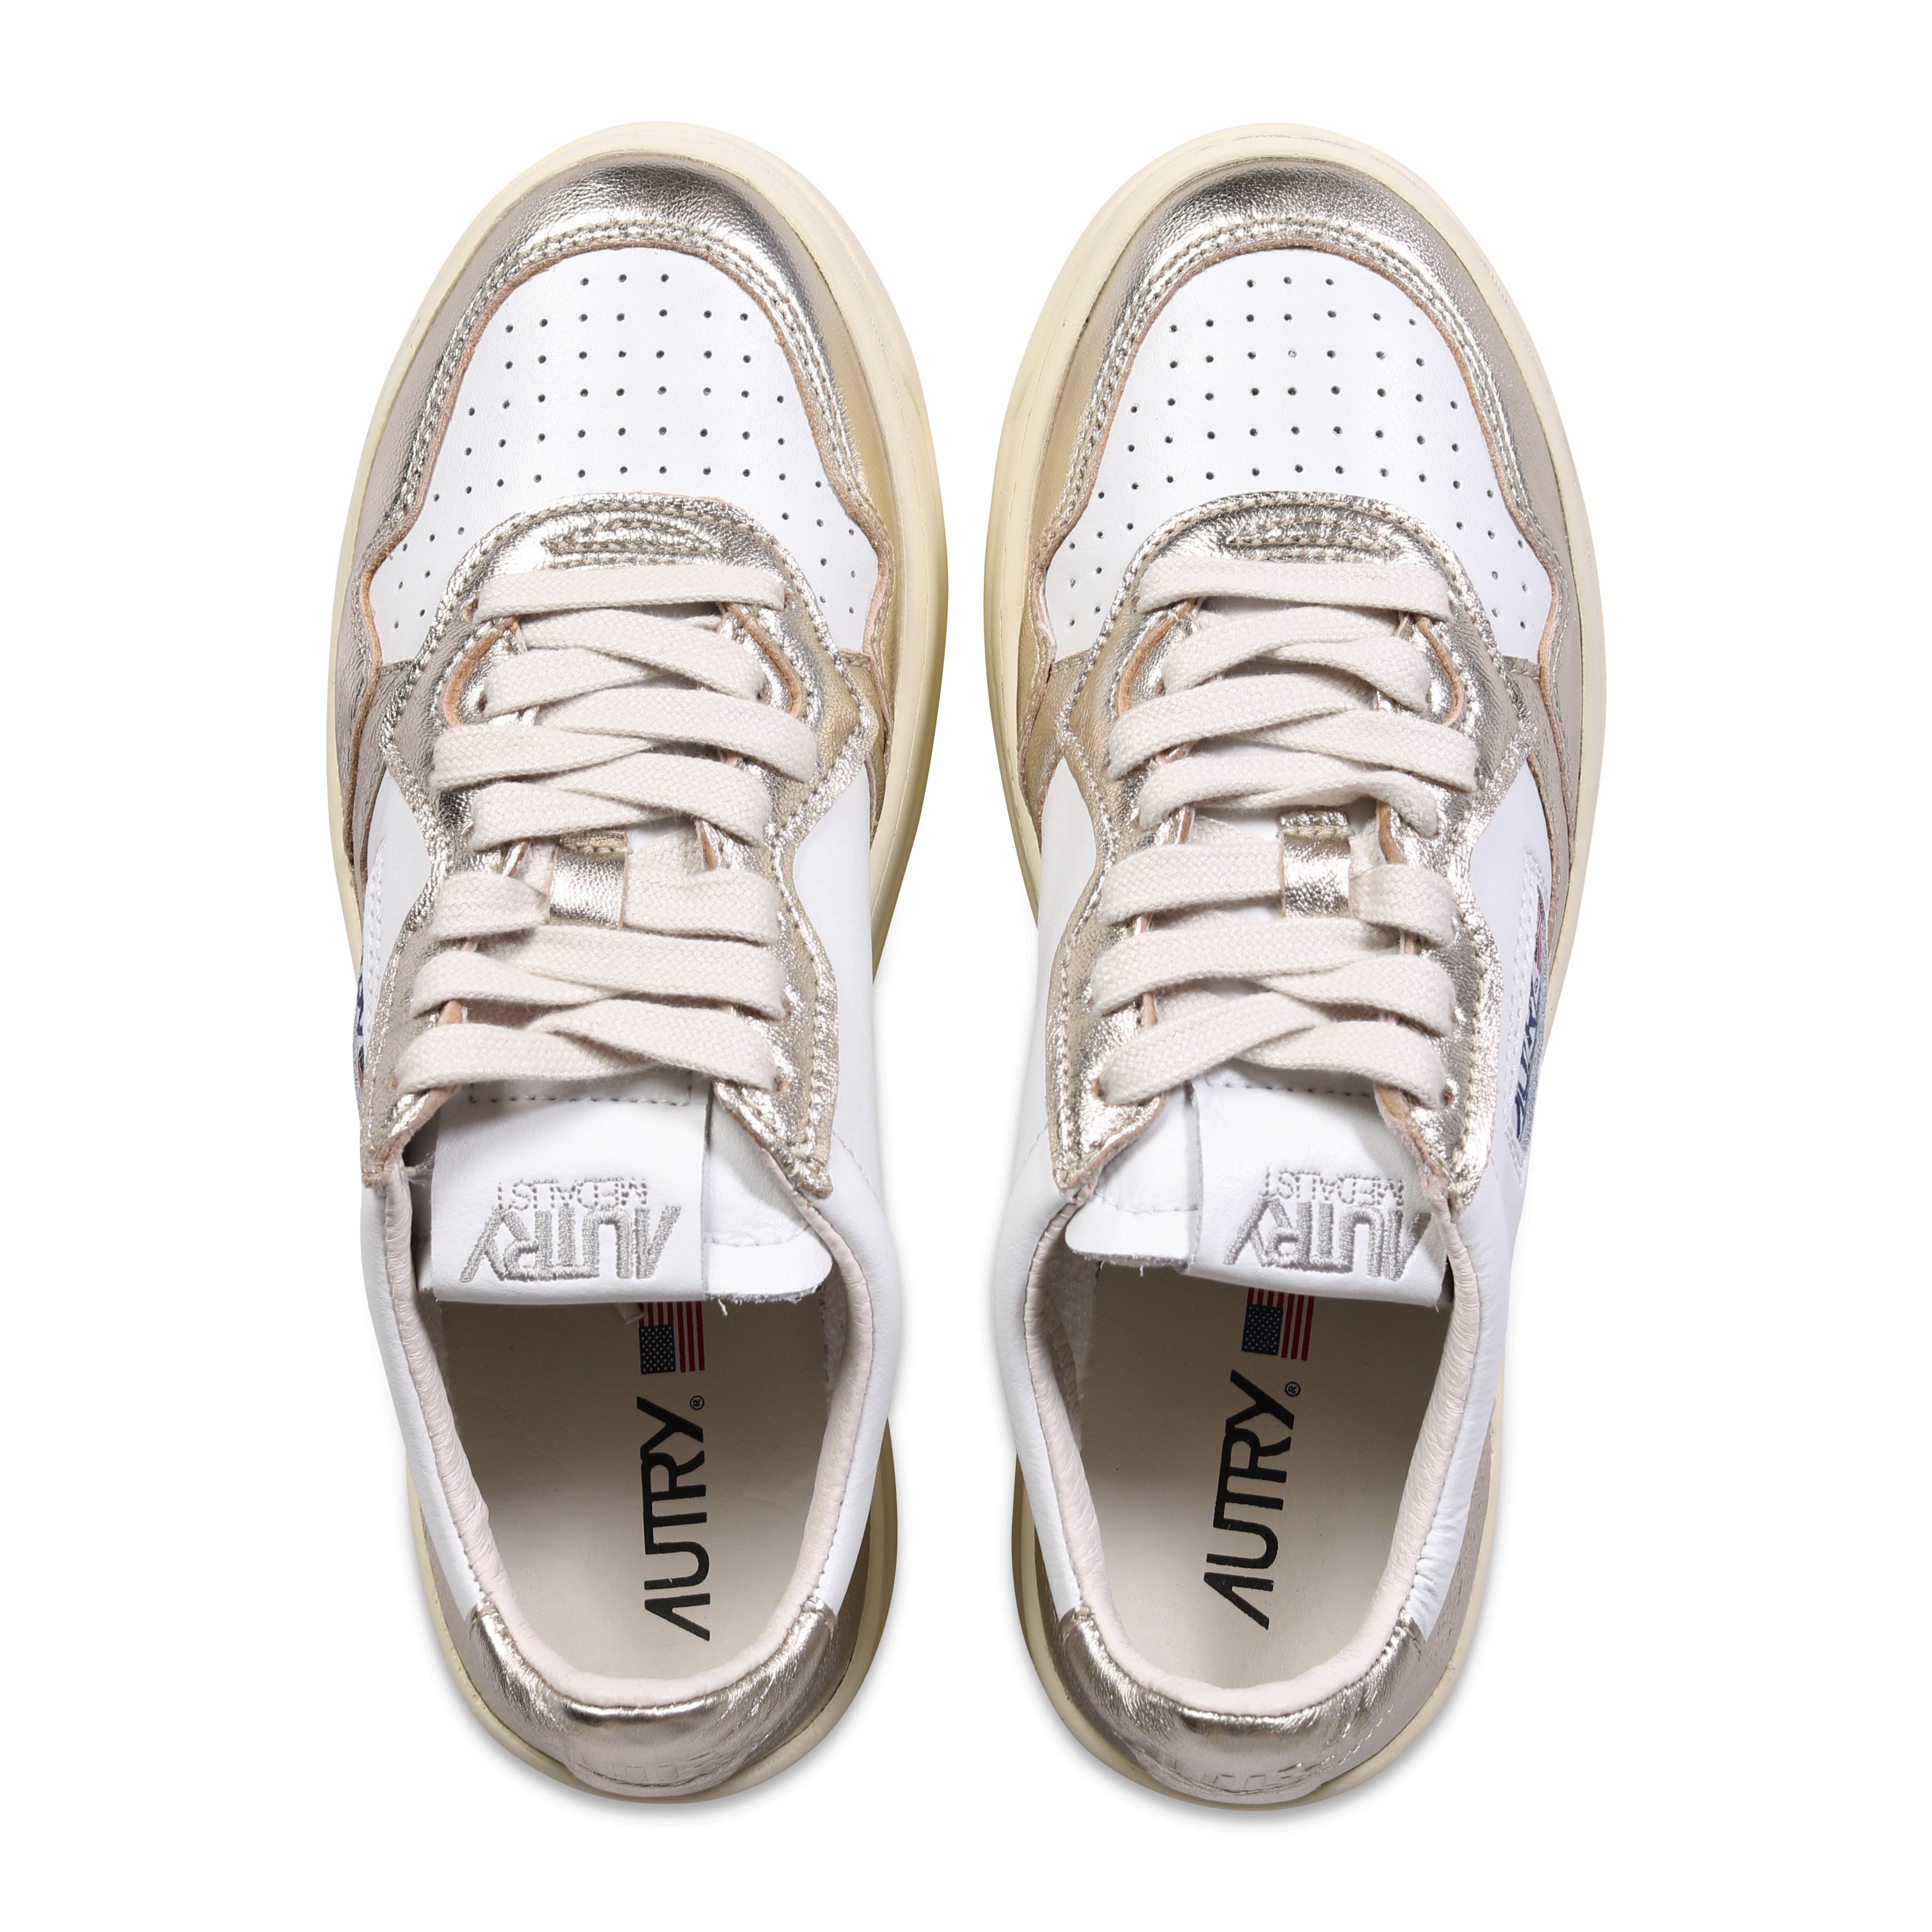 Autry Action Shoes Low Sneaker White/Platinum